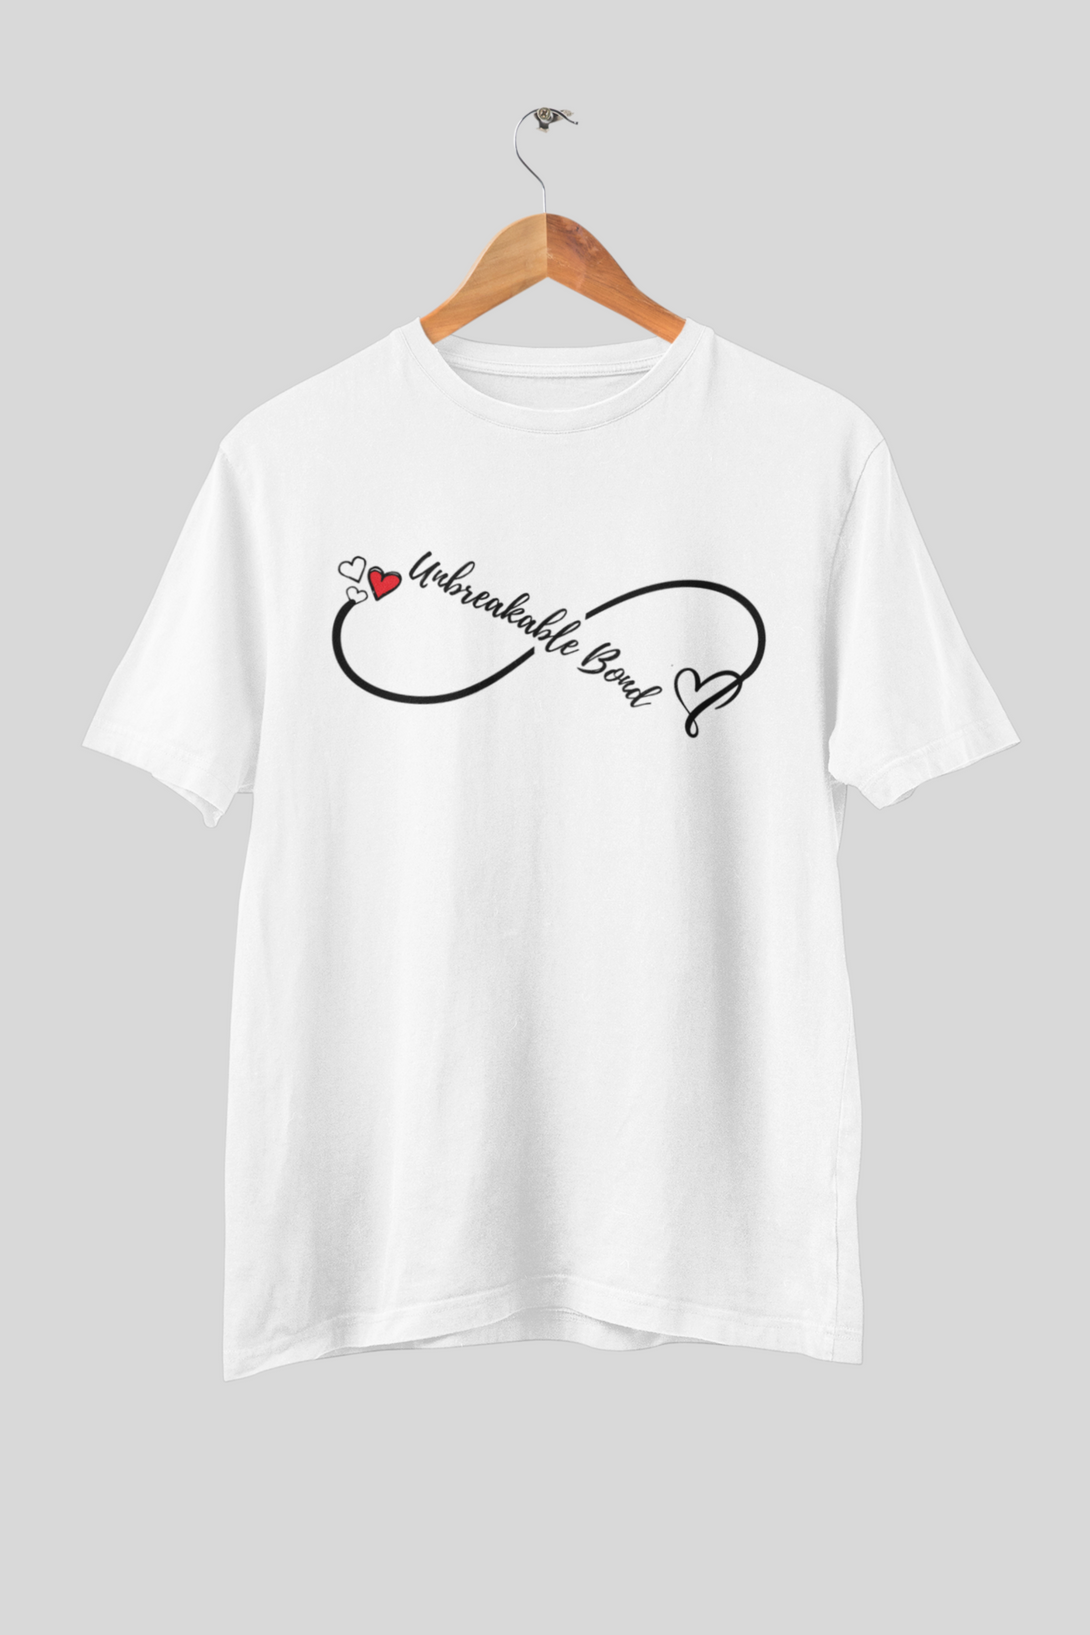 Unbreakable Love Bond Couple T Shirt For Women - WowWaves